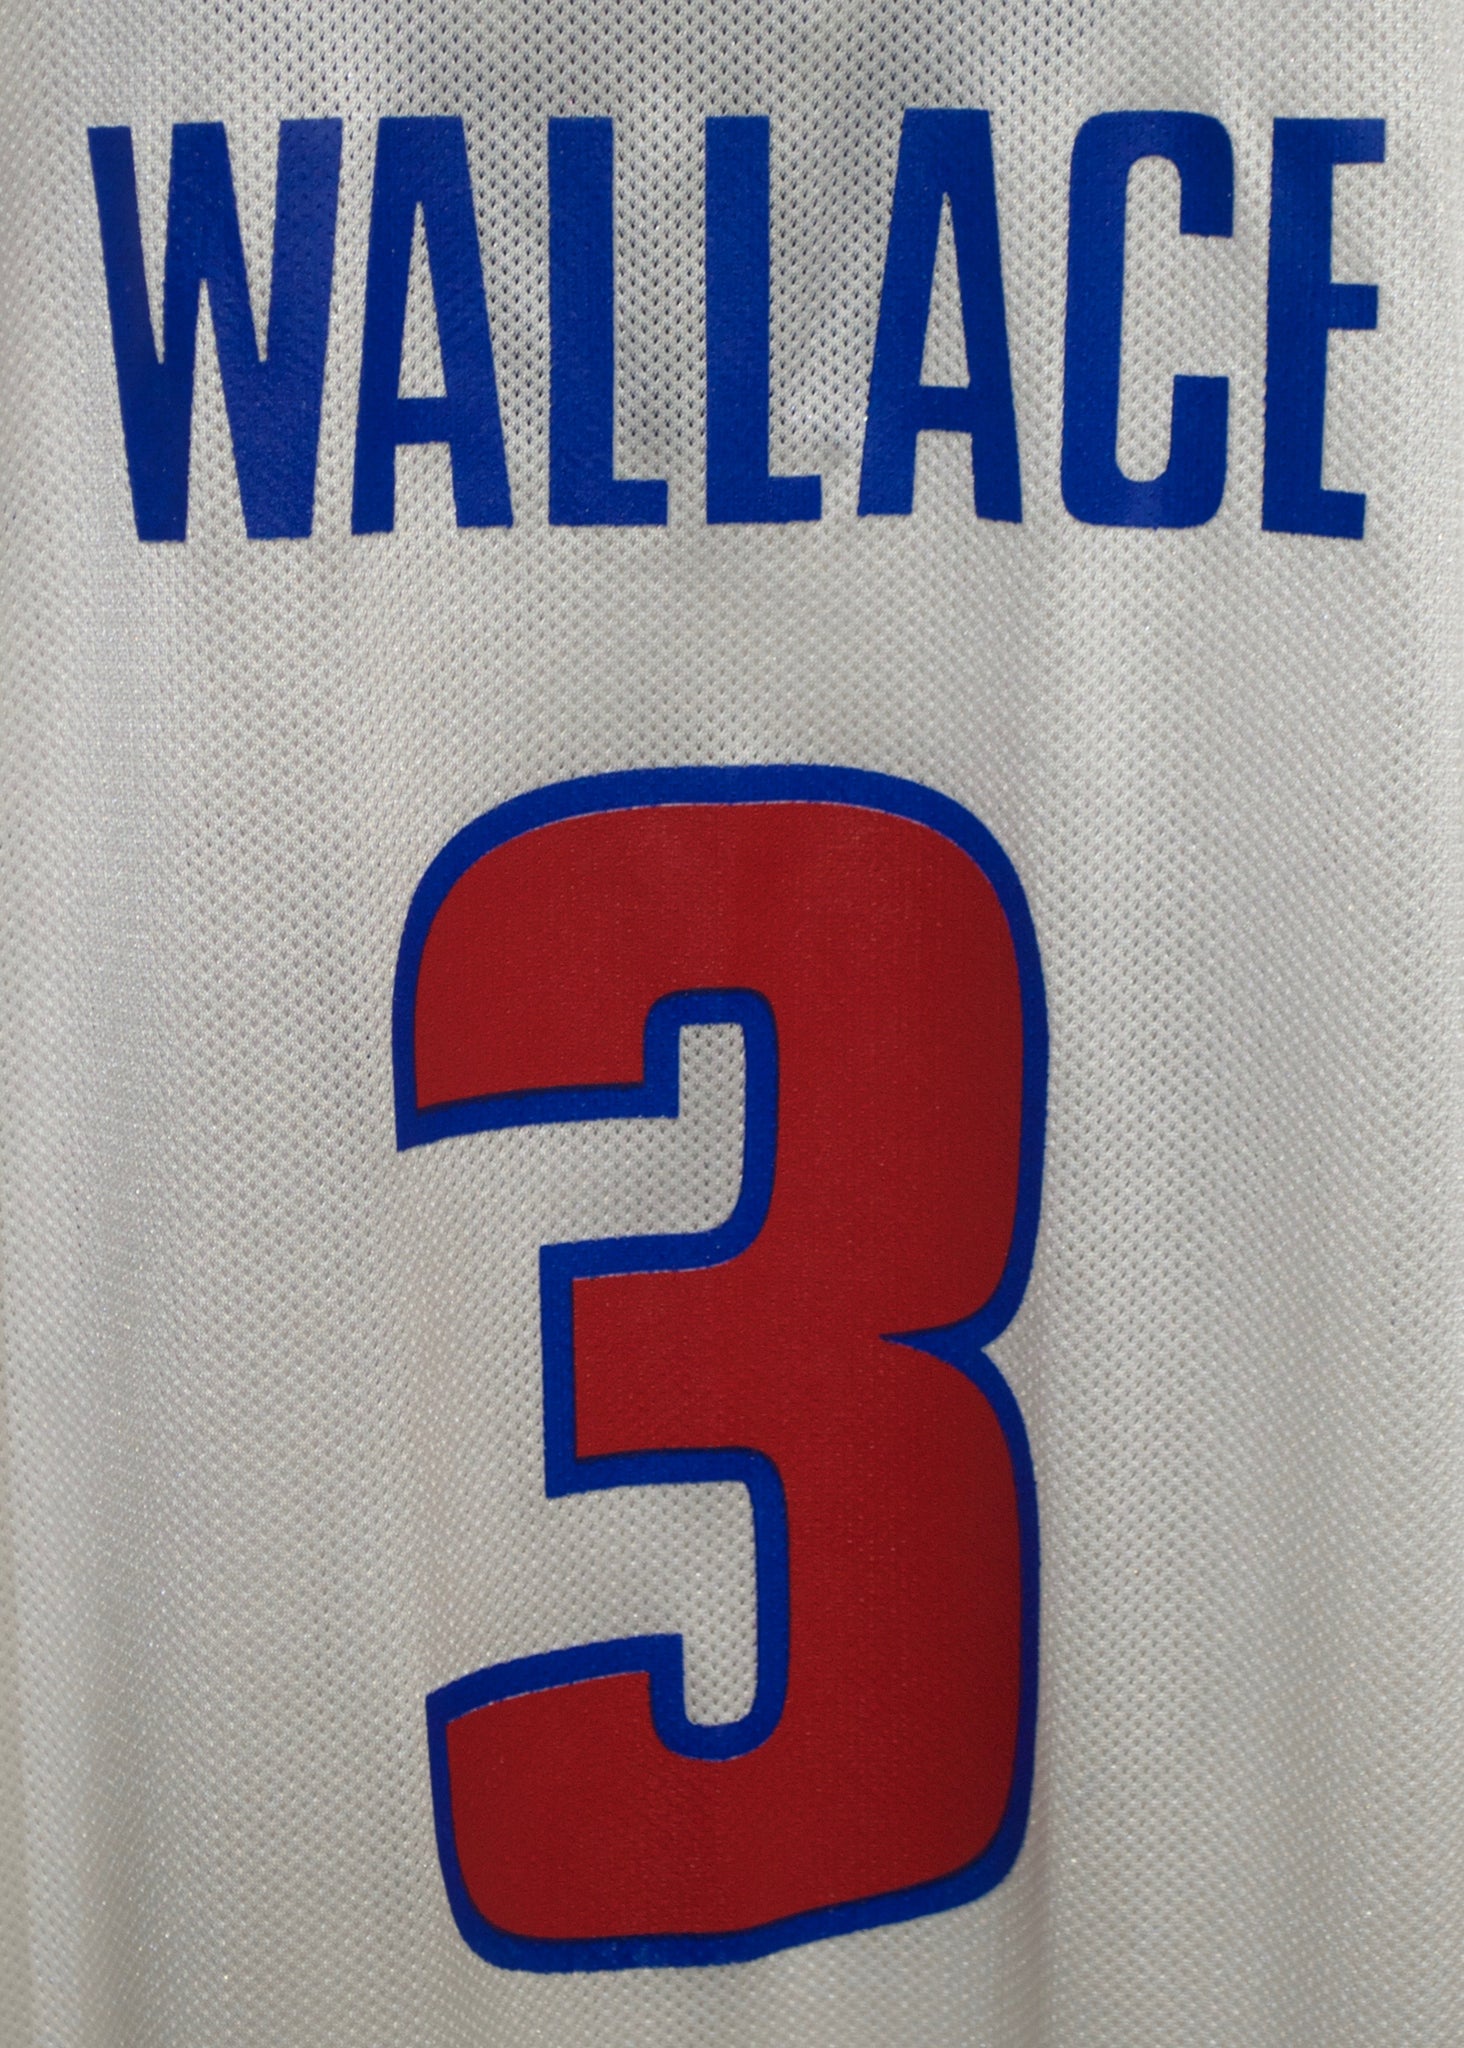 Ben Wallace Signed Pistons Jersey (JSA COA)